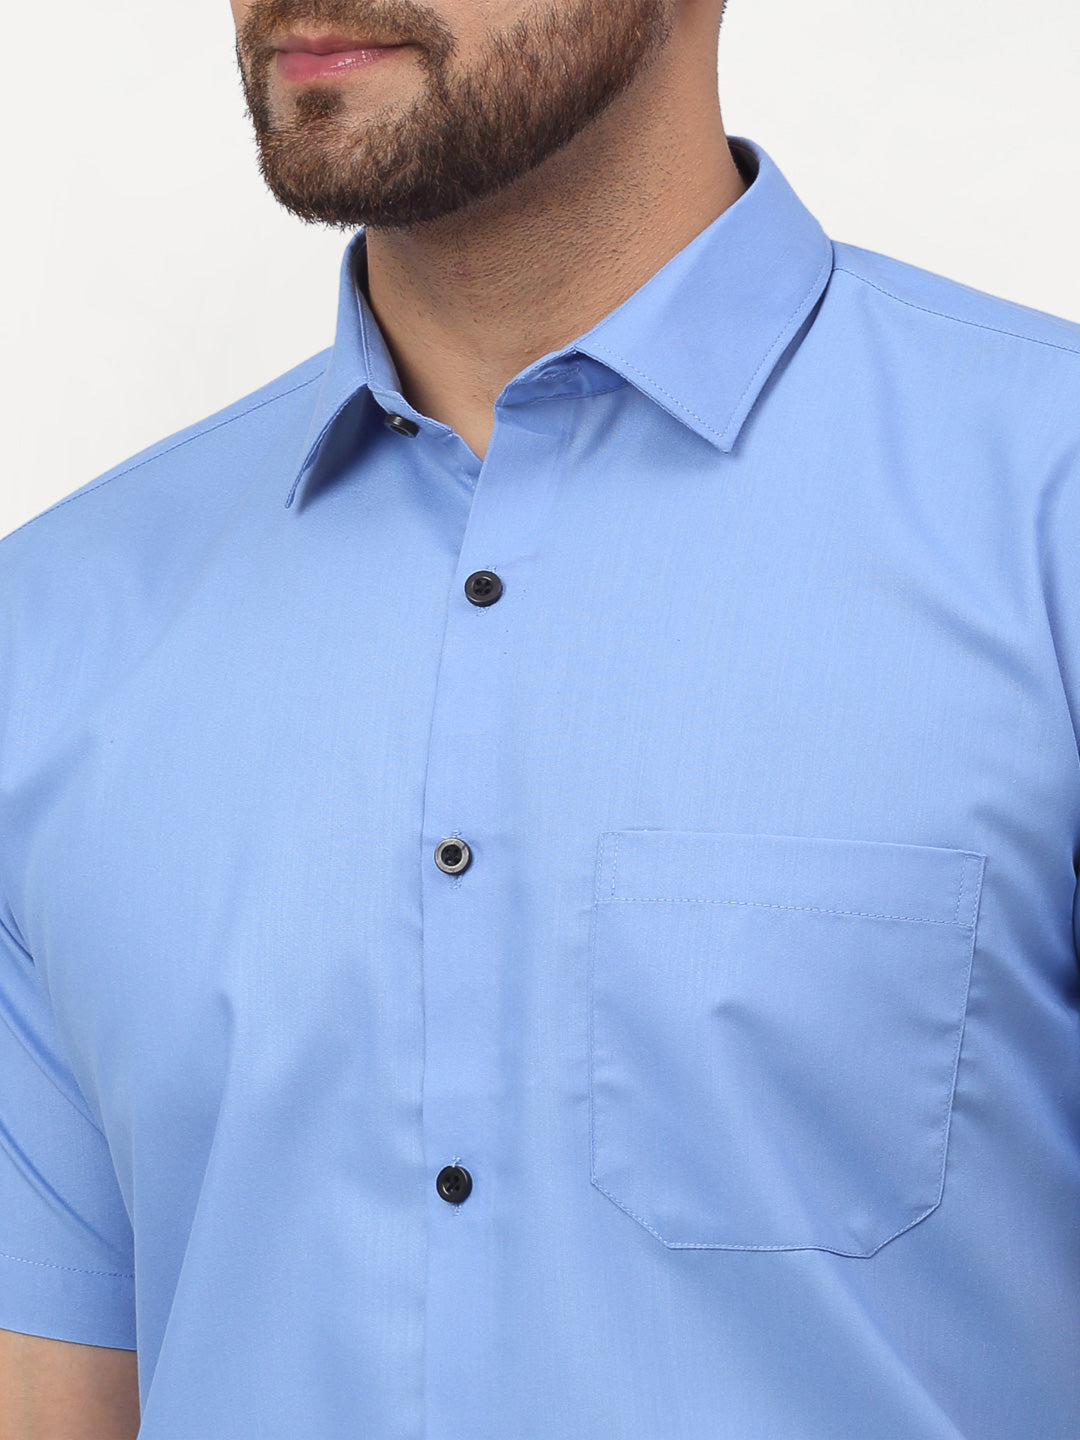 Men's Blue Cotton Half Sleeves Solid Formal Shirts ( SF 754Light-Blue ) - Jainish